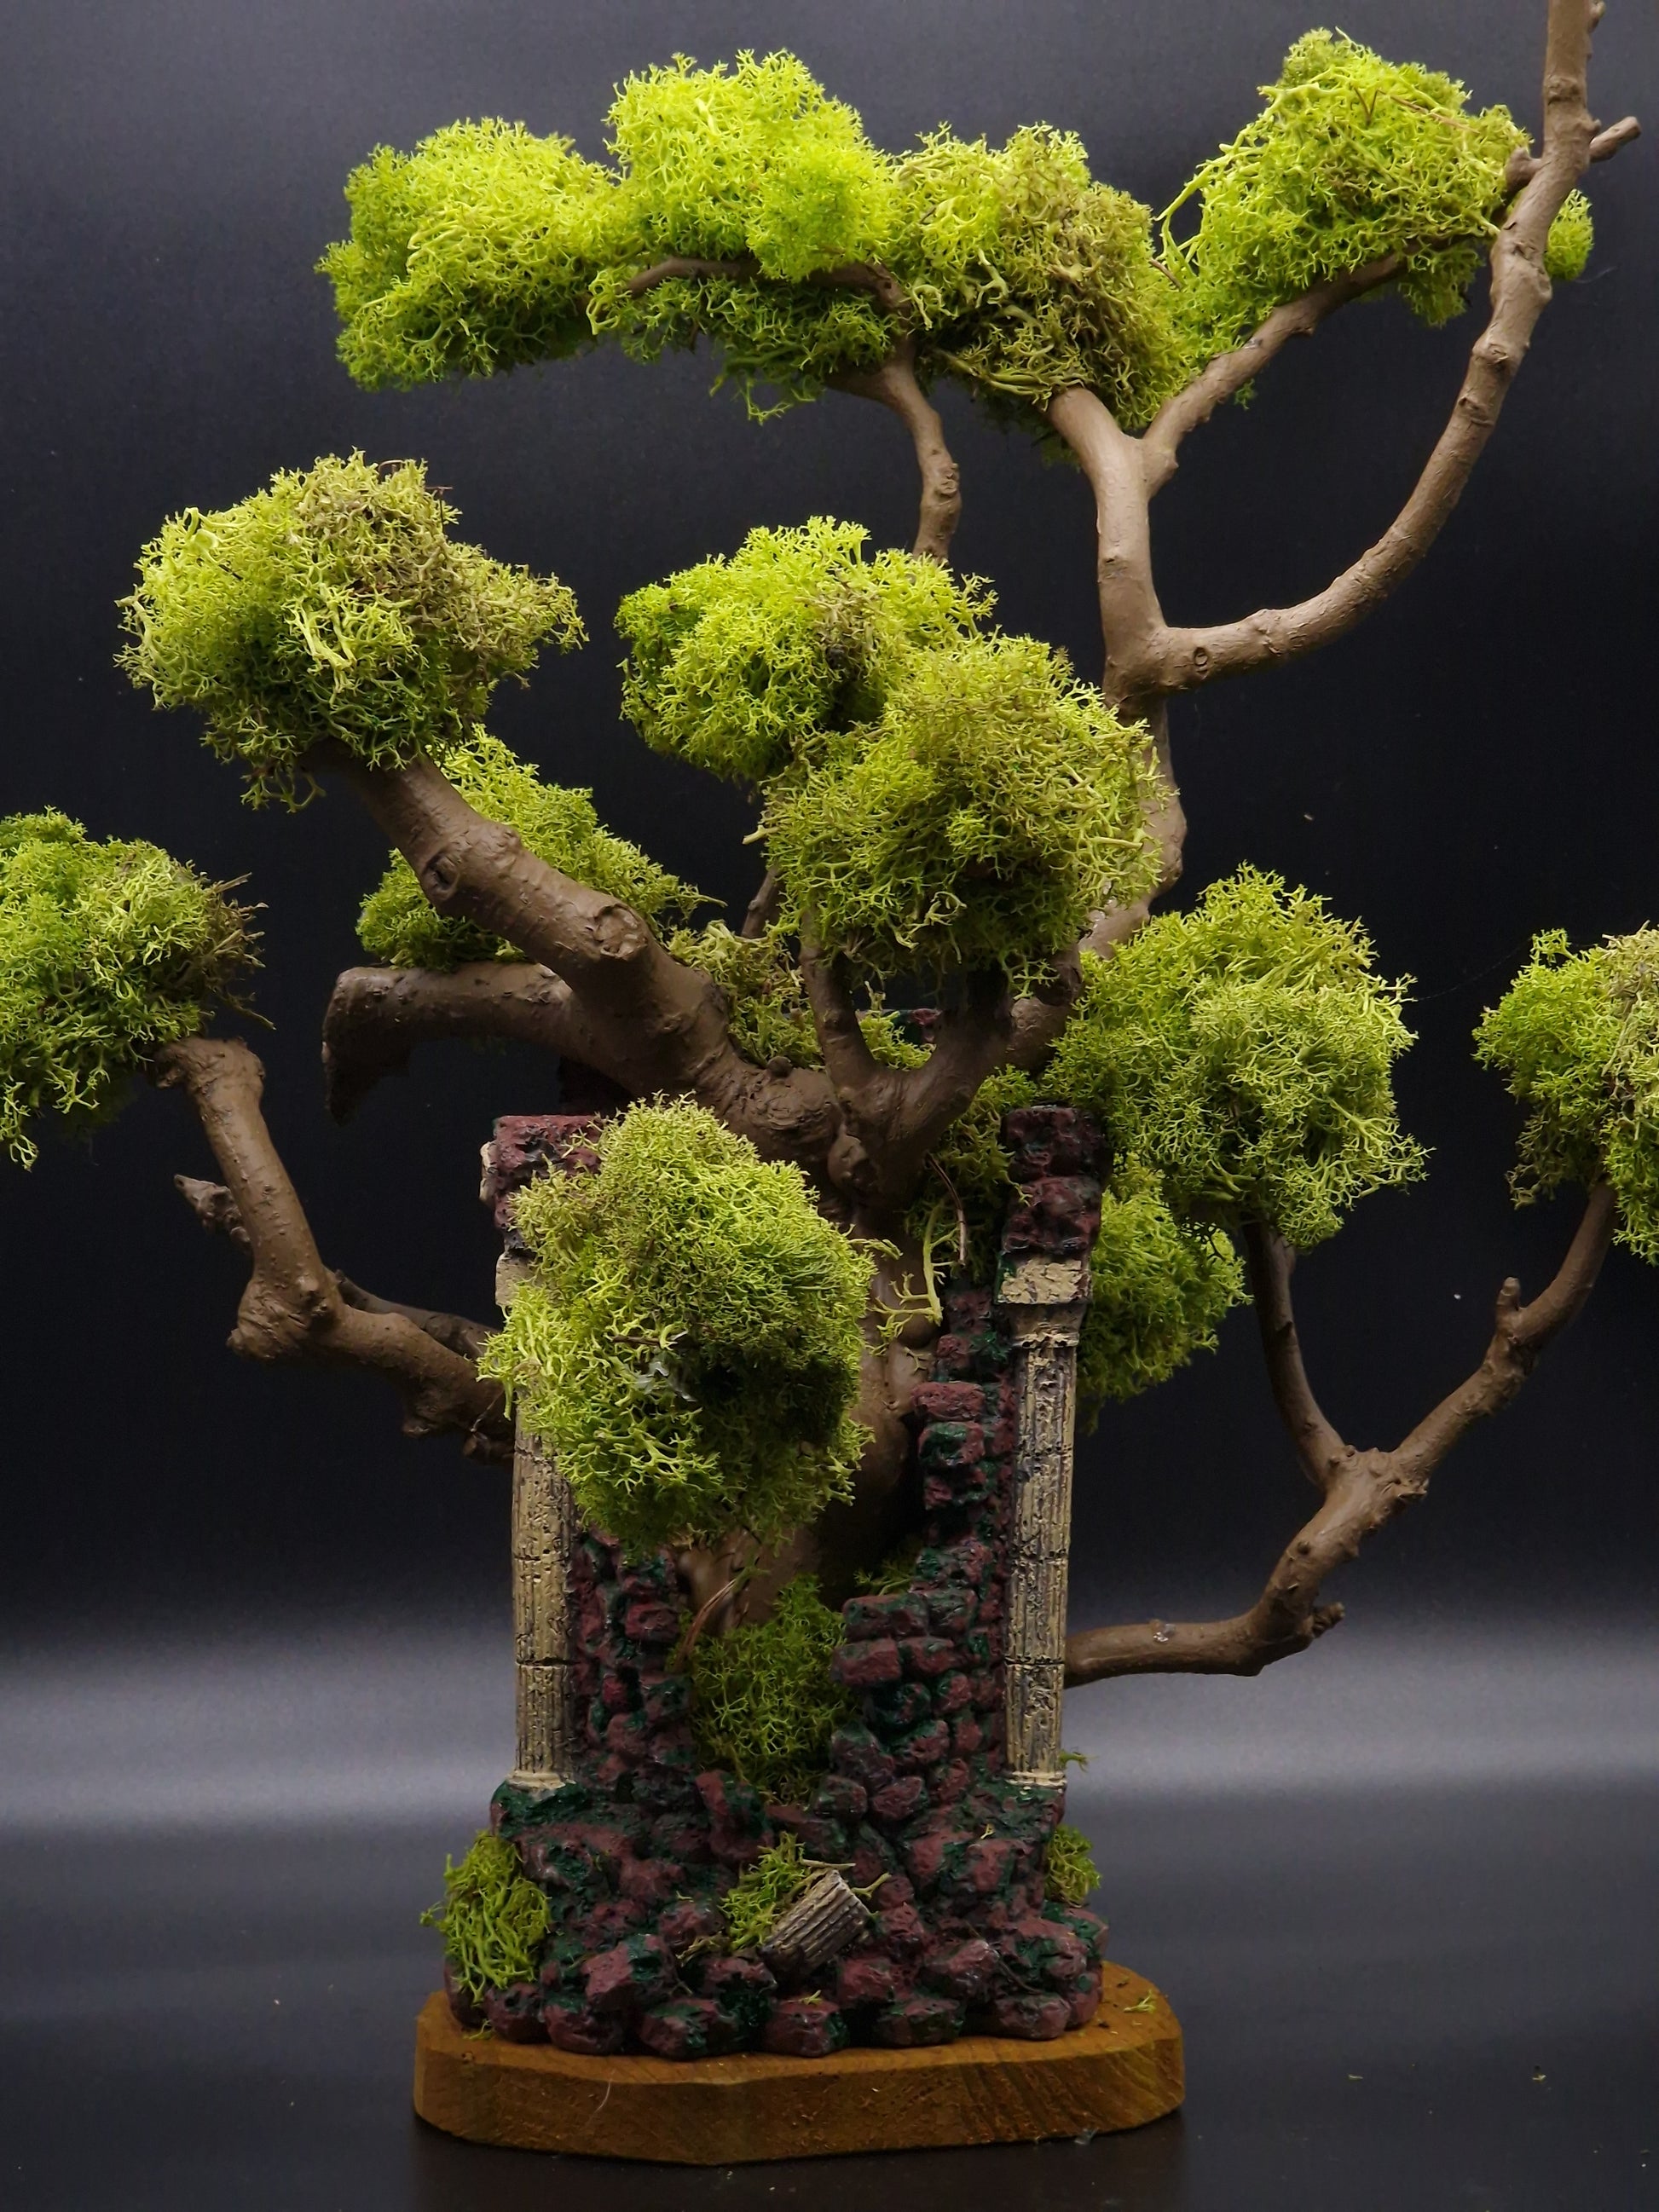 Living) Moss Bonsai Tree For Sale